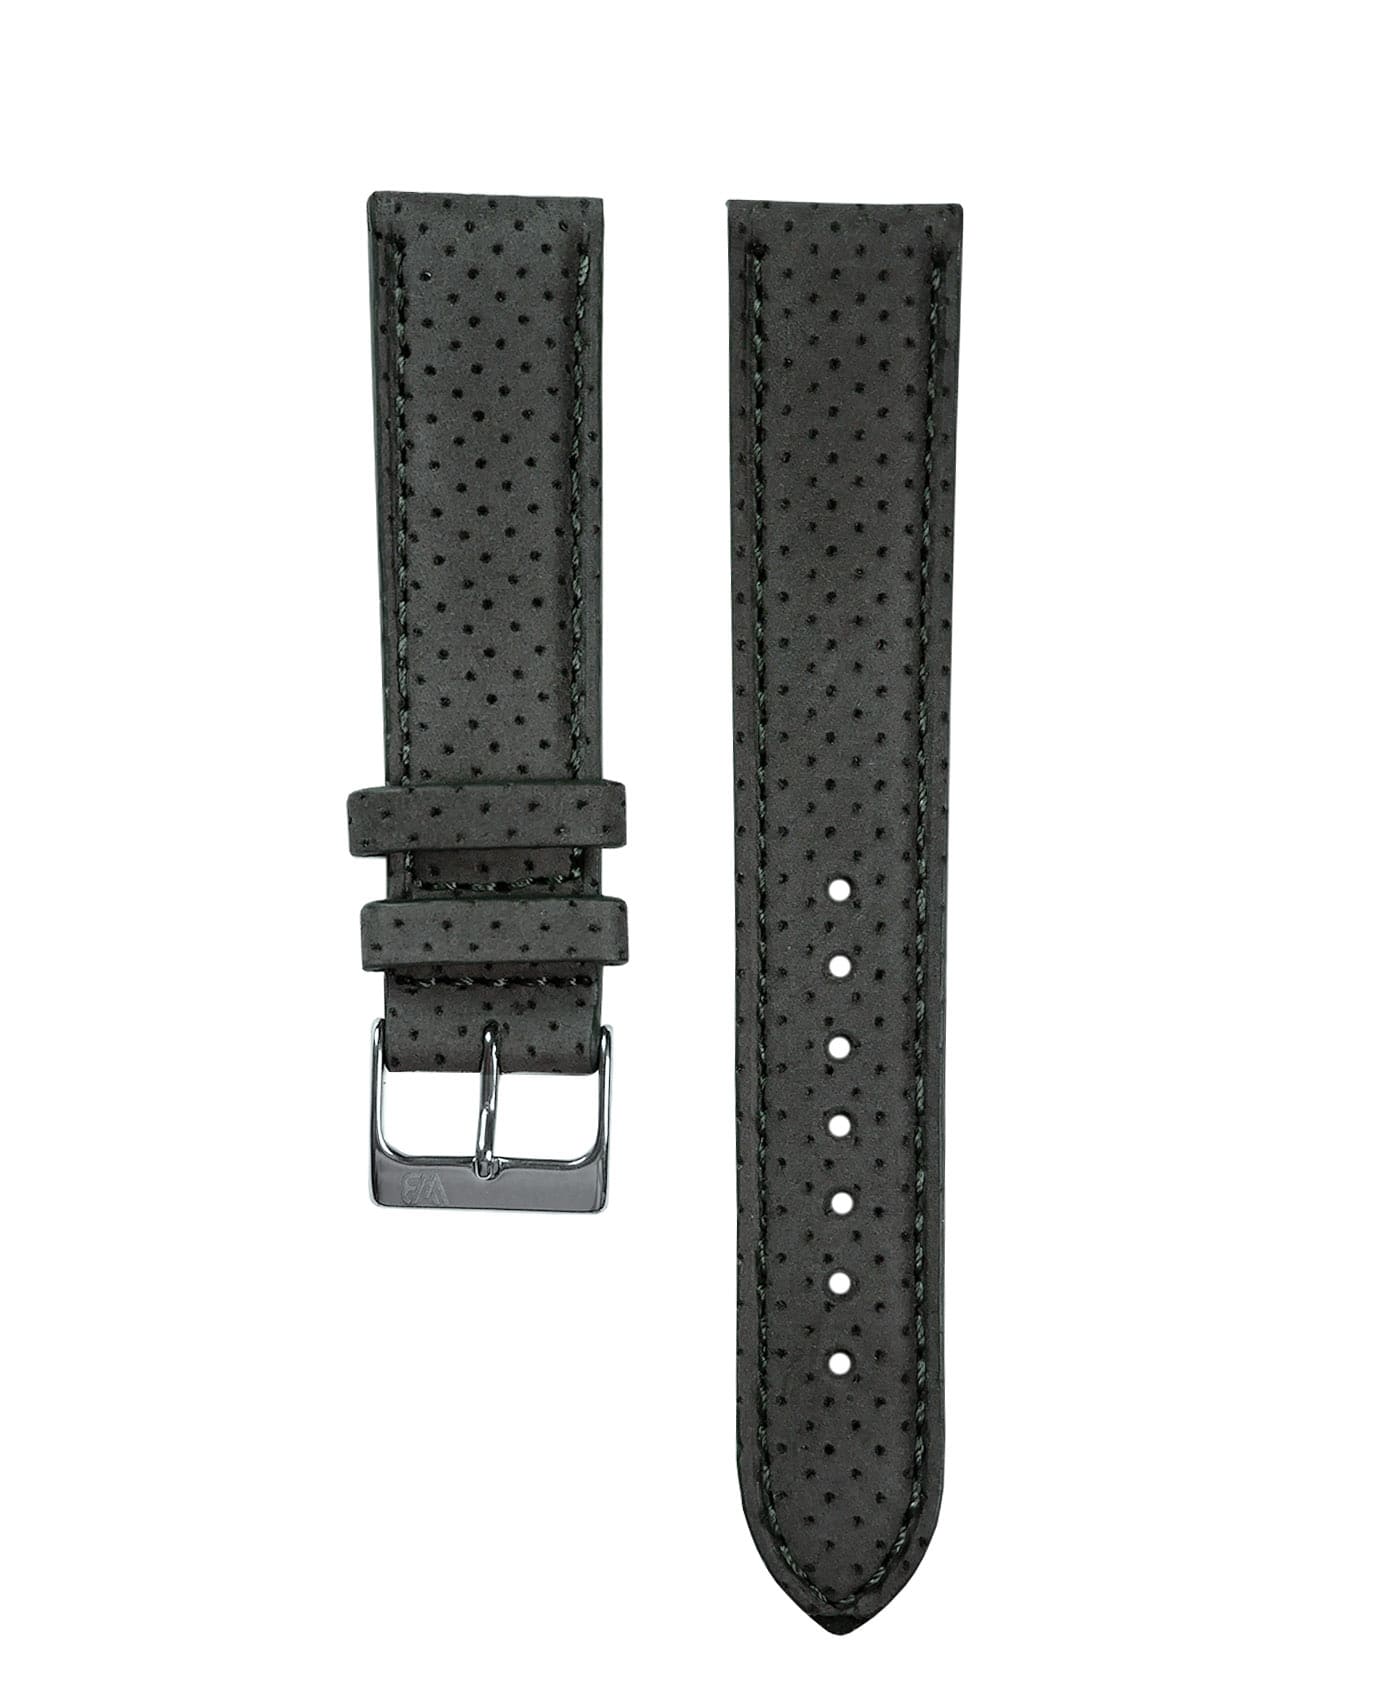 WB-classic-racing-leather-watch-strap-dark-grey-min